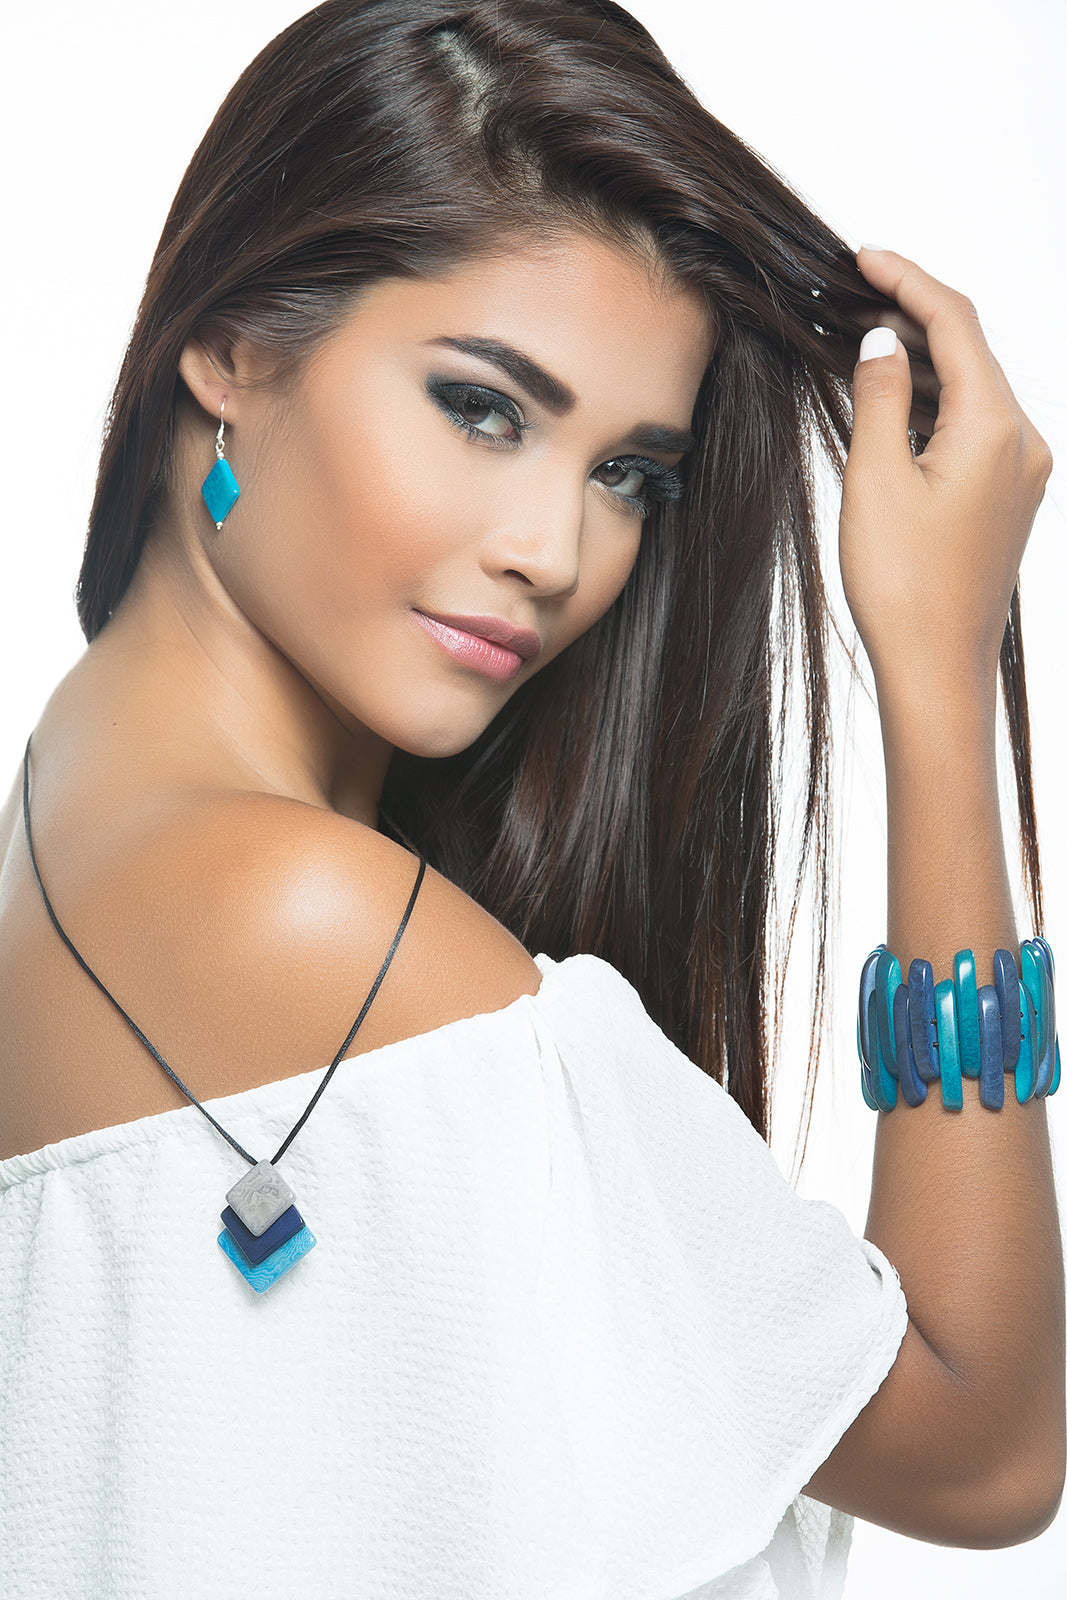 Diamante earrings (11mm) - Turquoise